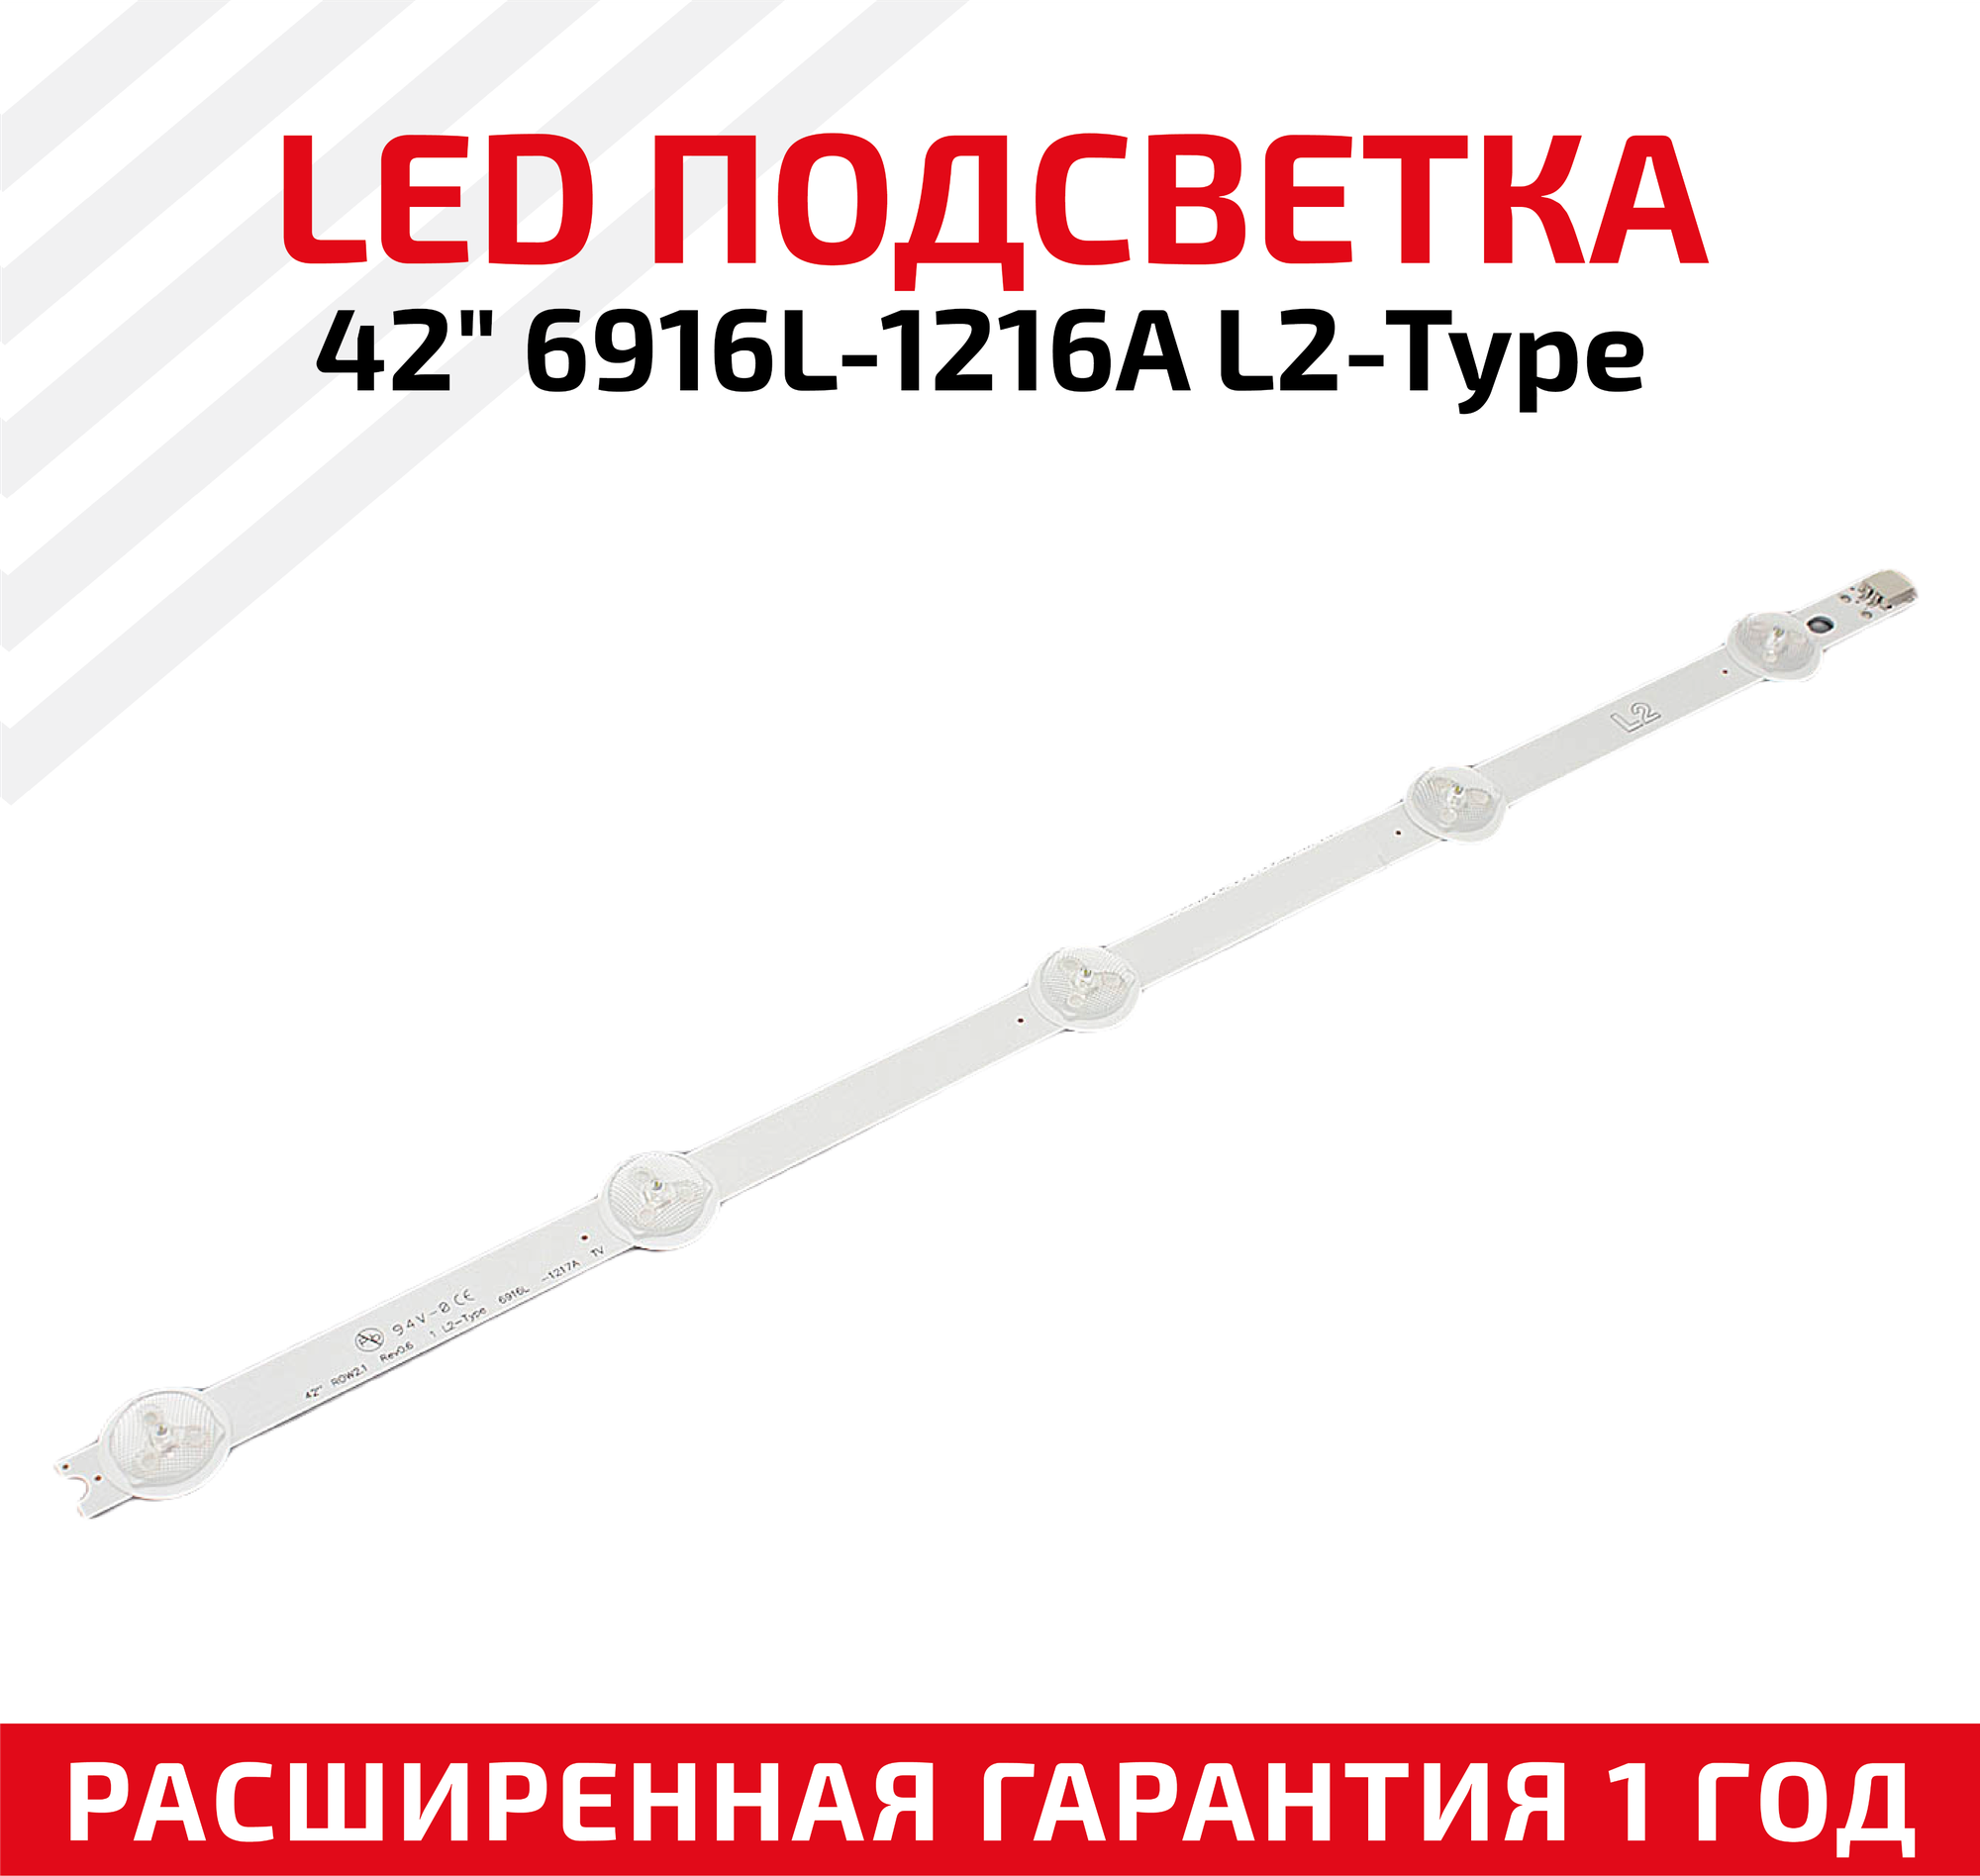 LED подсветка (светодиодная планка) для телевизора 42" ROW2.1 Rev0.6 1 L2-Type 6916L-1217A TV